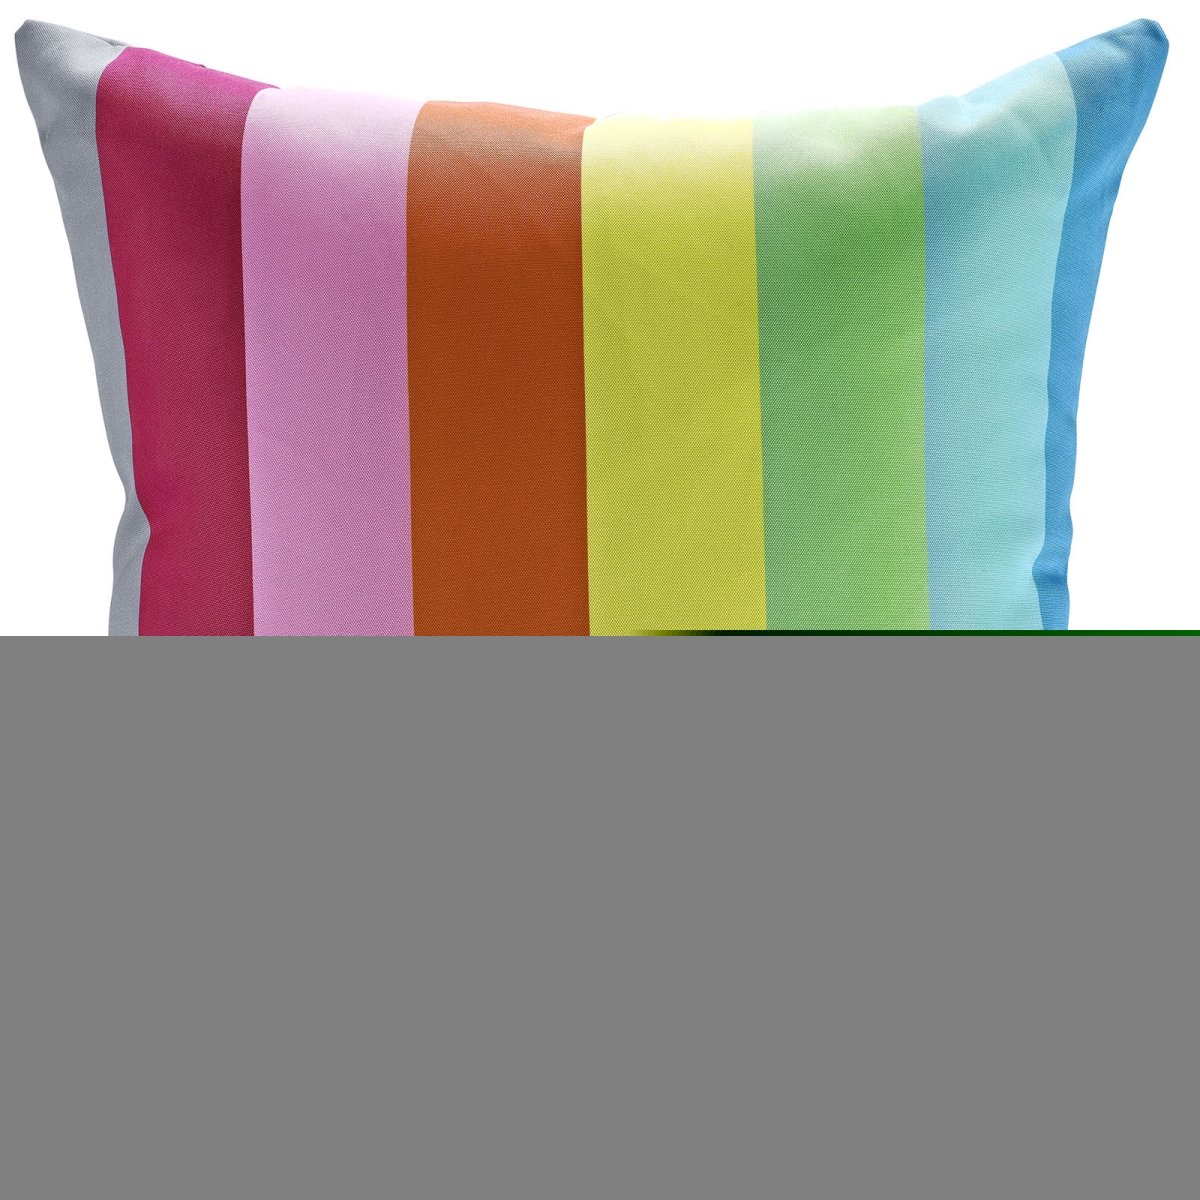 Modway Eei-2156-ran Modway Outdoor Patio Pillow, Rainbow